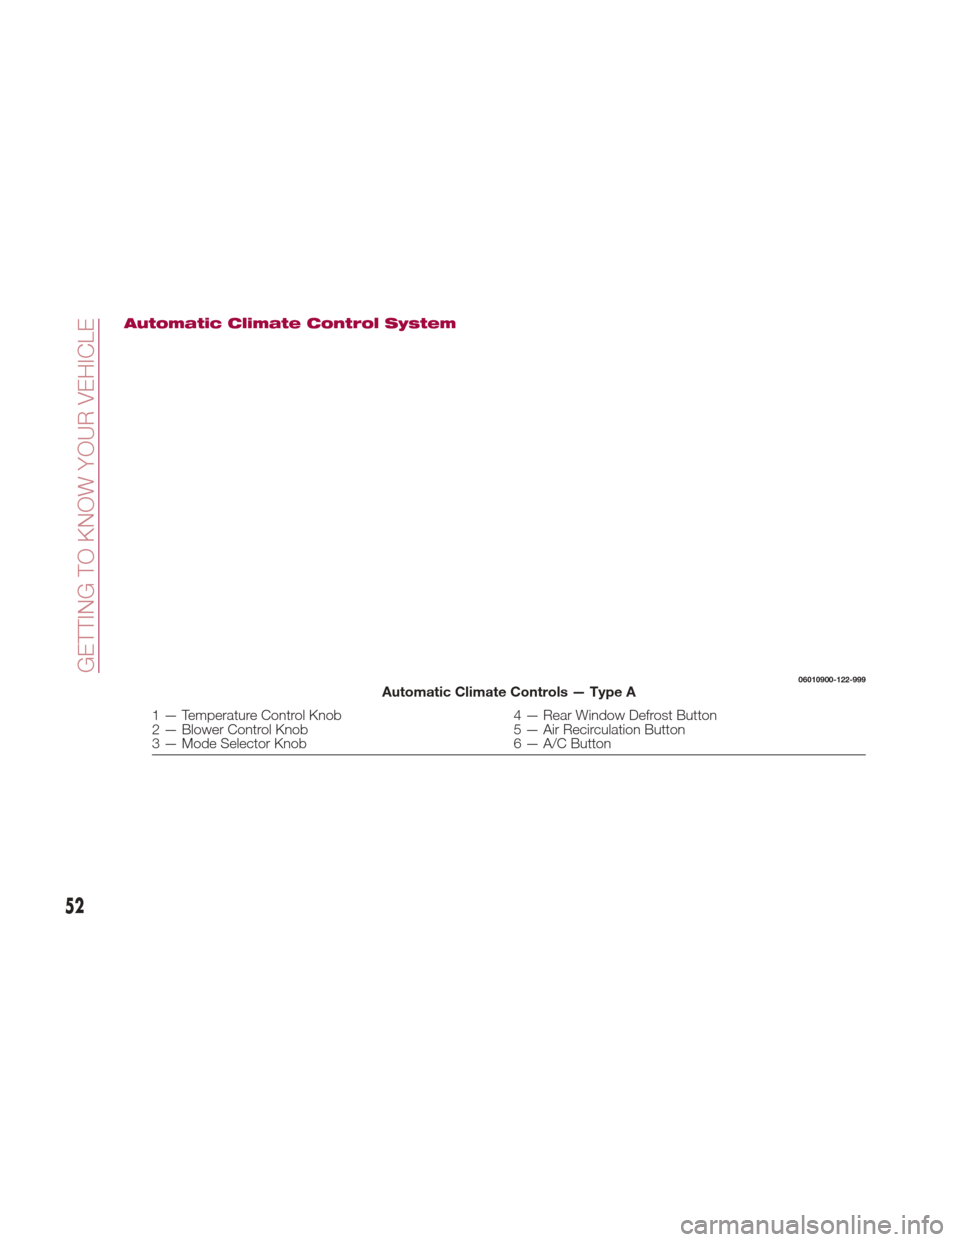 FIAT 124 SPIDER 2017 2.G Workshop Manual Automatic Climate Control System
06010900-122-999Automatic Climate Controls — Type A
1 — Temperature Control Knob4 — Rear Window Defrost Button
2 — Blower Control Knob 5 — Air Recirculation 